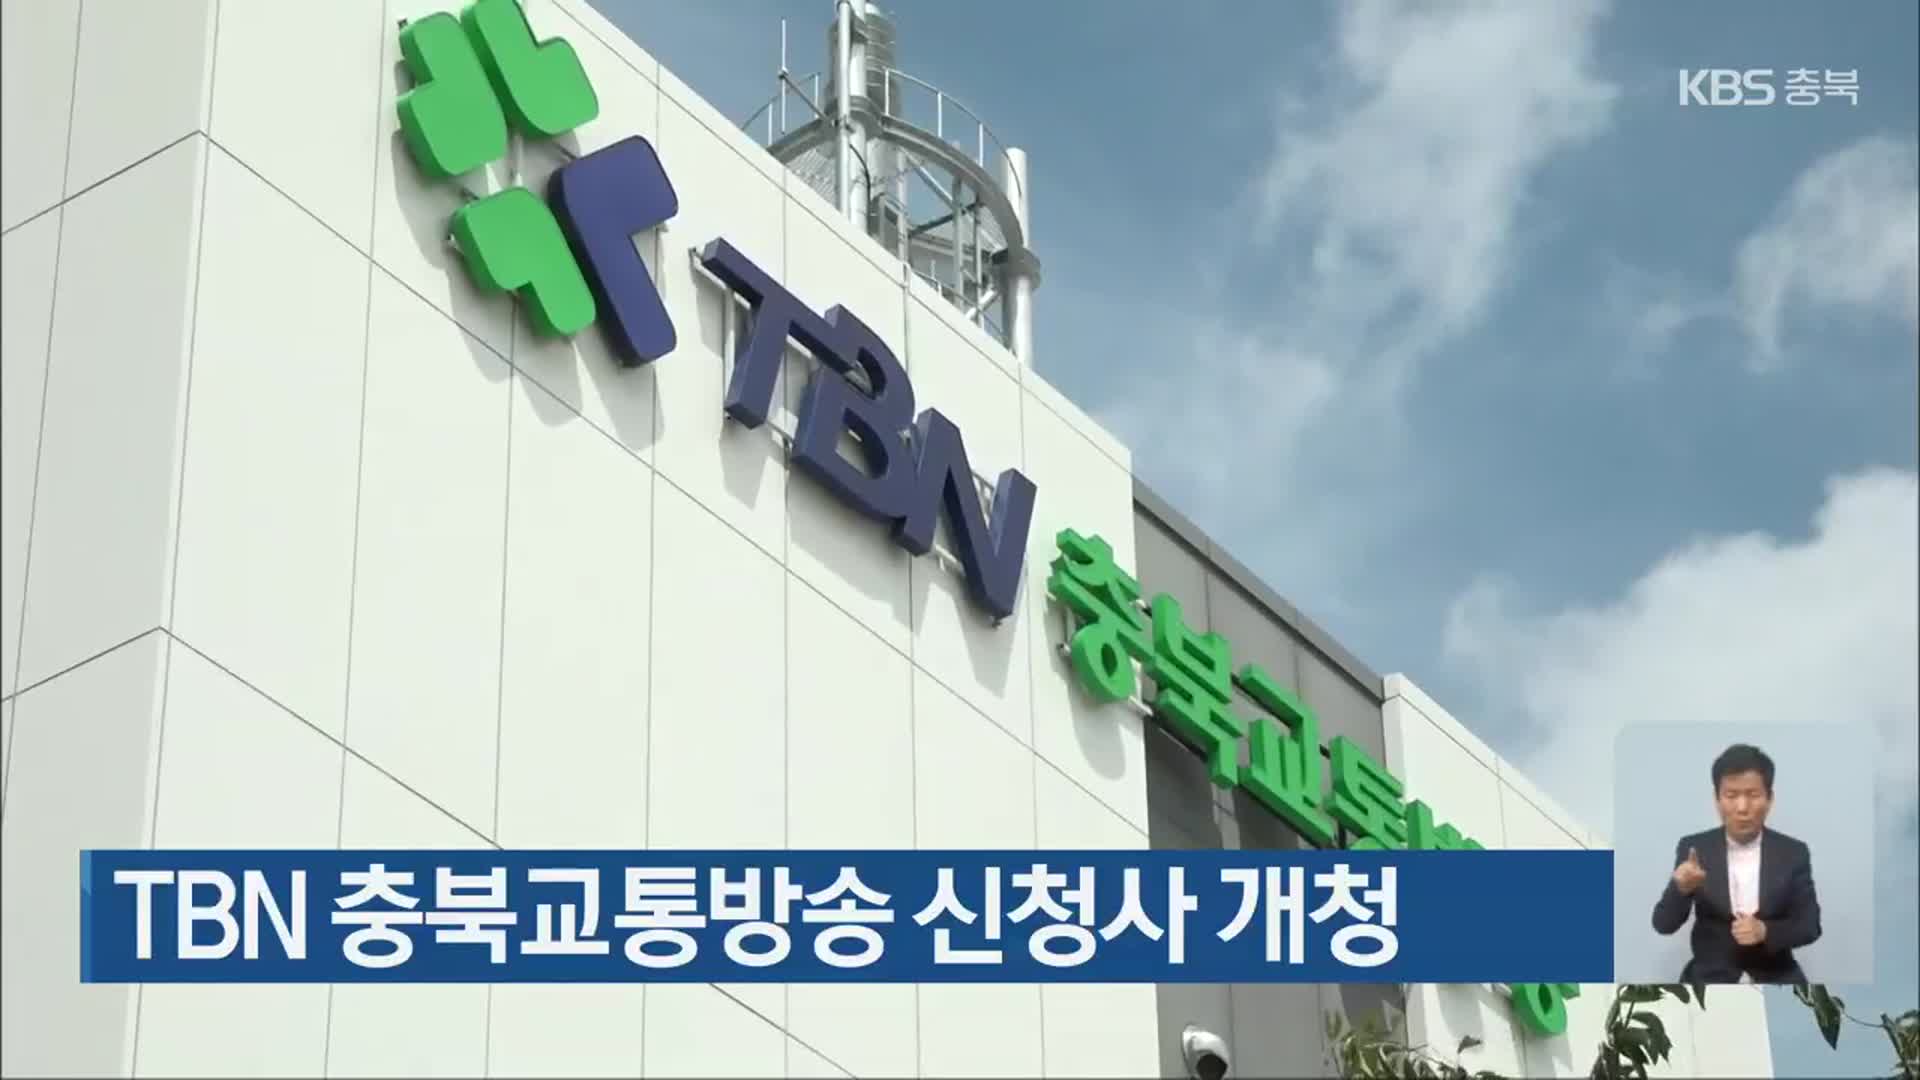 TBN 충북교통방송 신청사 개청